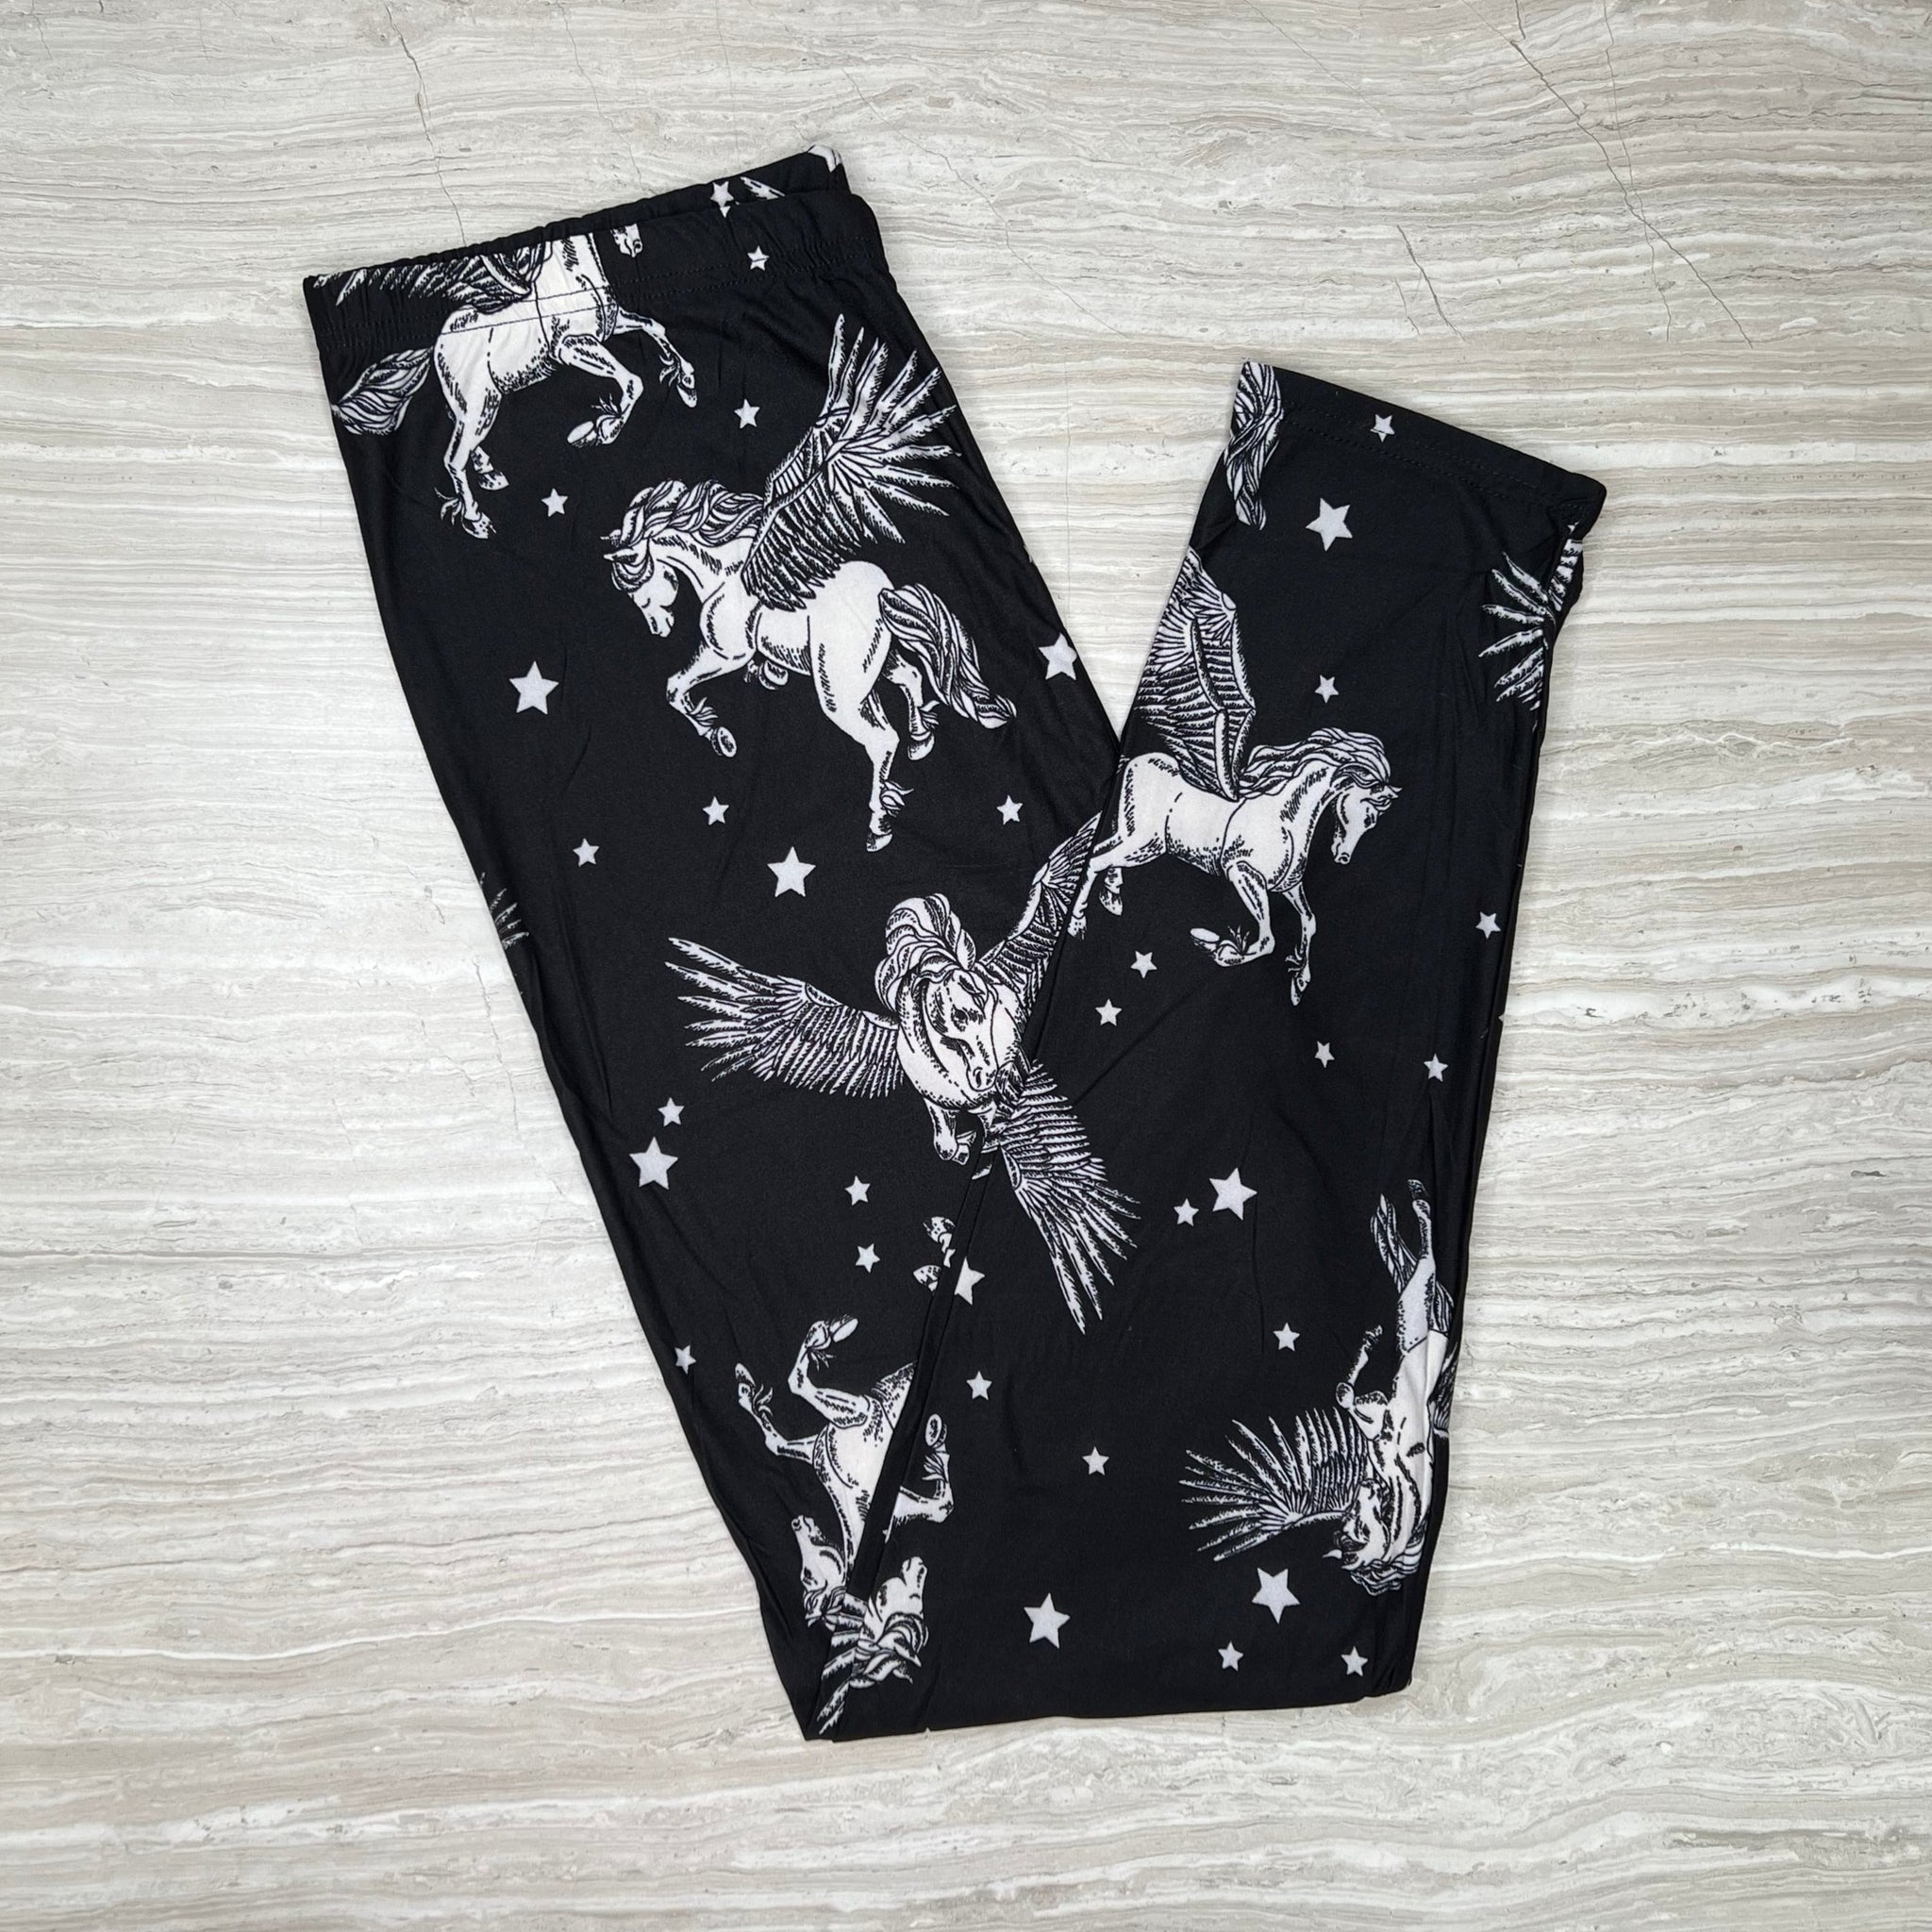 Celestial Pegasus Print Ultra-Soft High-Rise Leggings – Comfort Stretch, Versatile Fashion